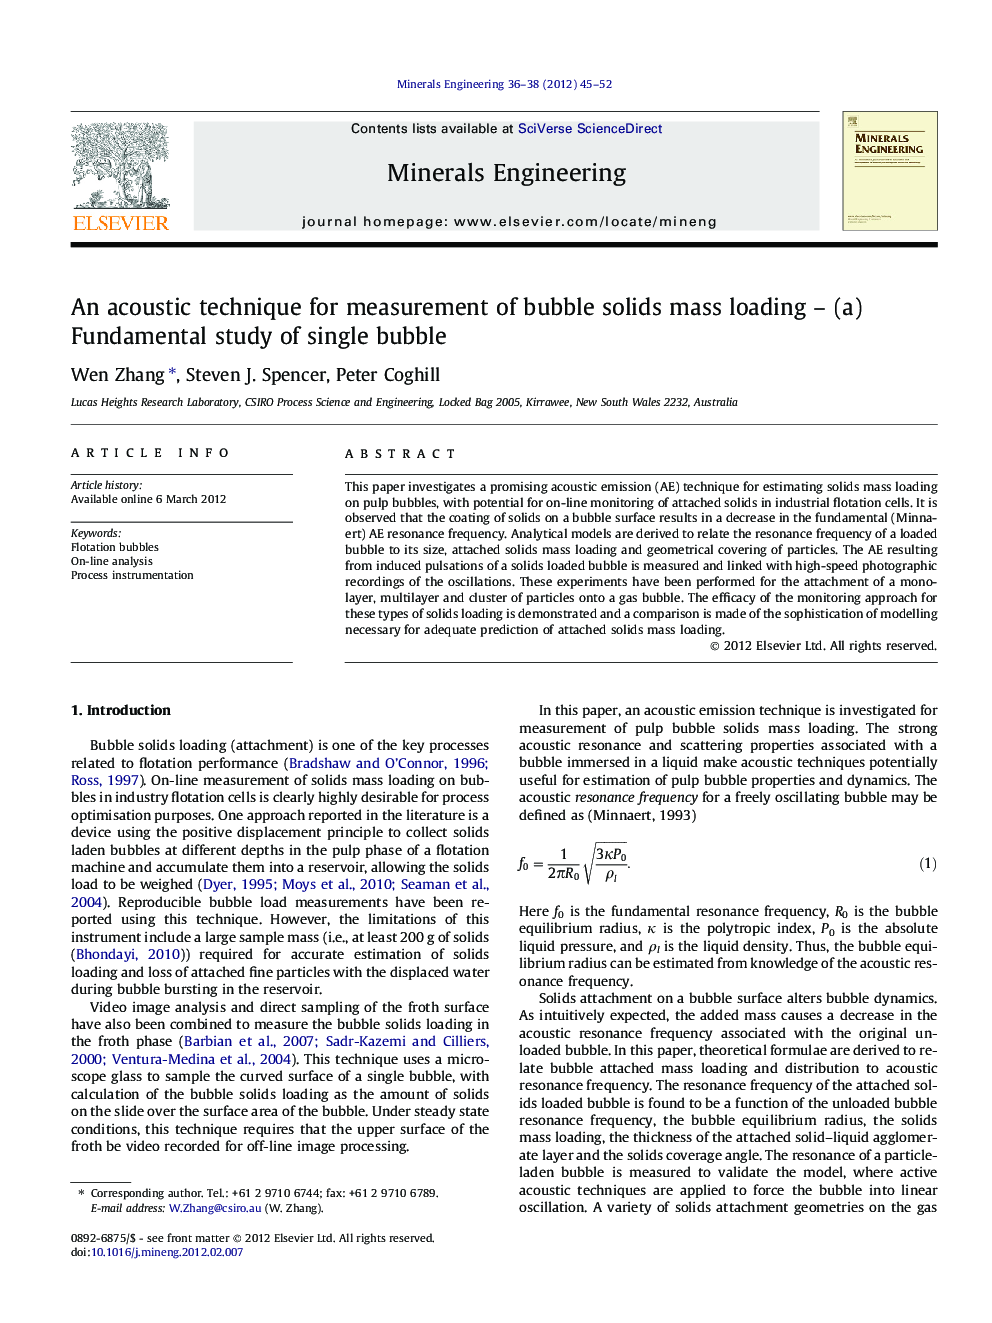 An acoustic technique for measurement of bubble solids mass loading – (a) Fundamental study of single bubble